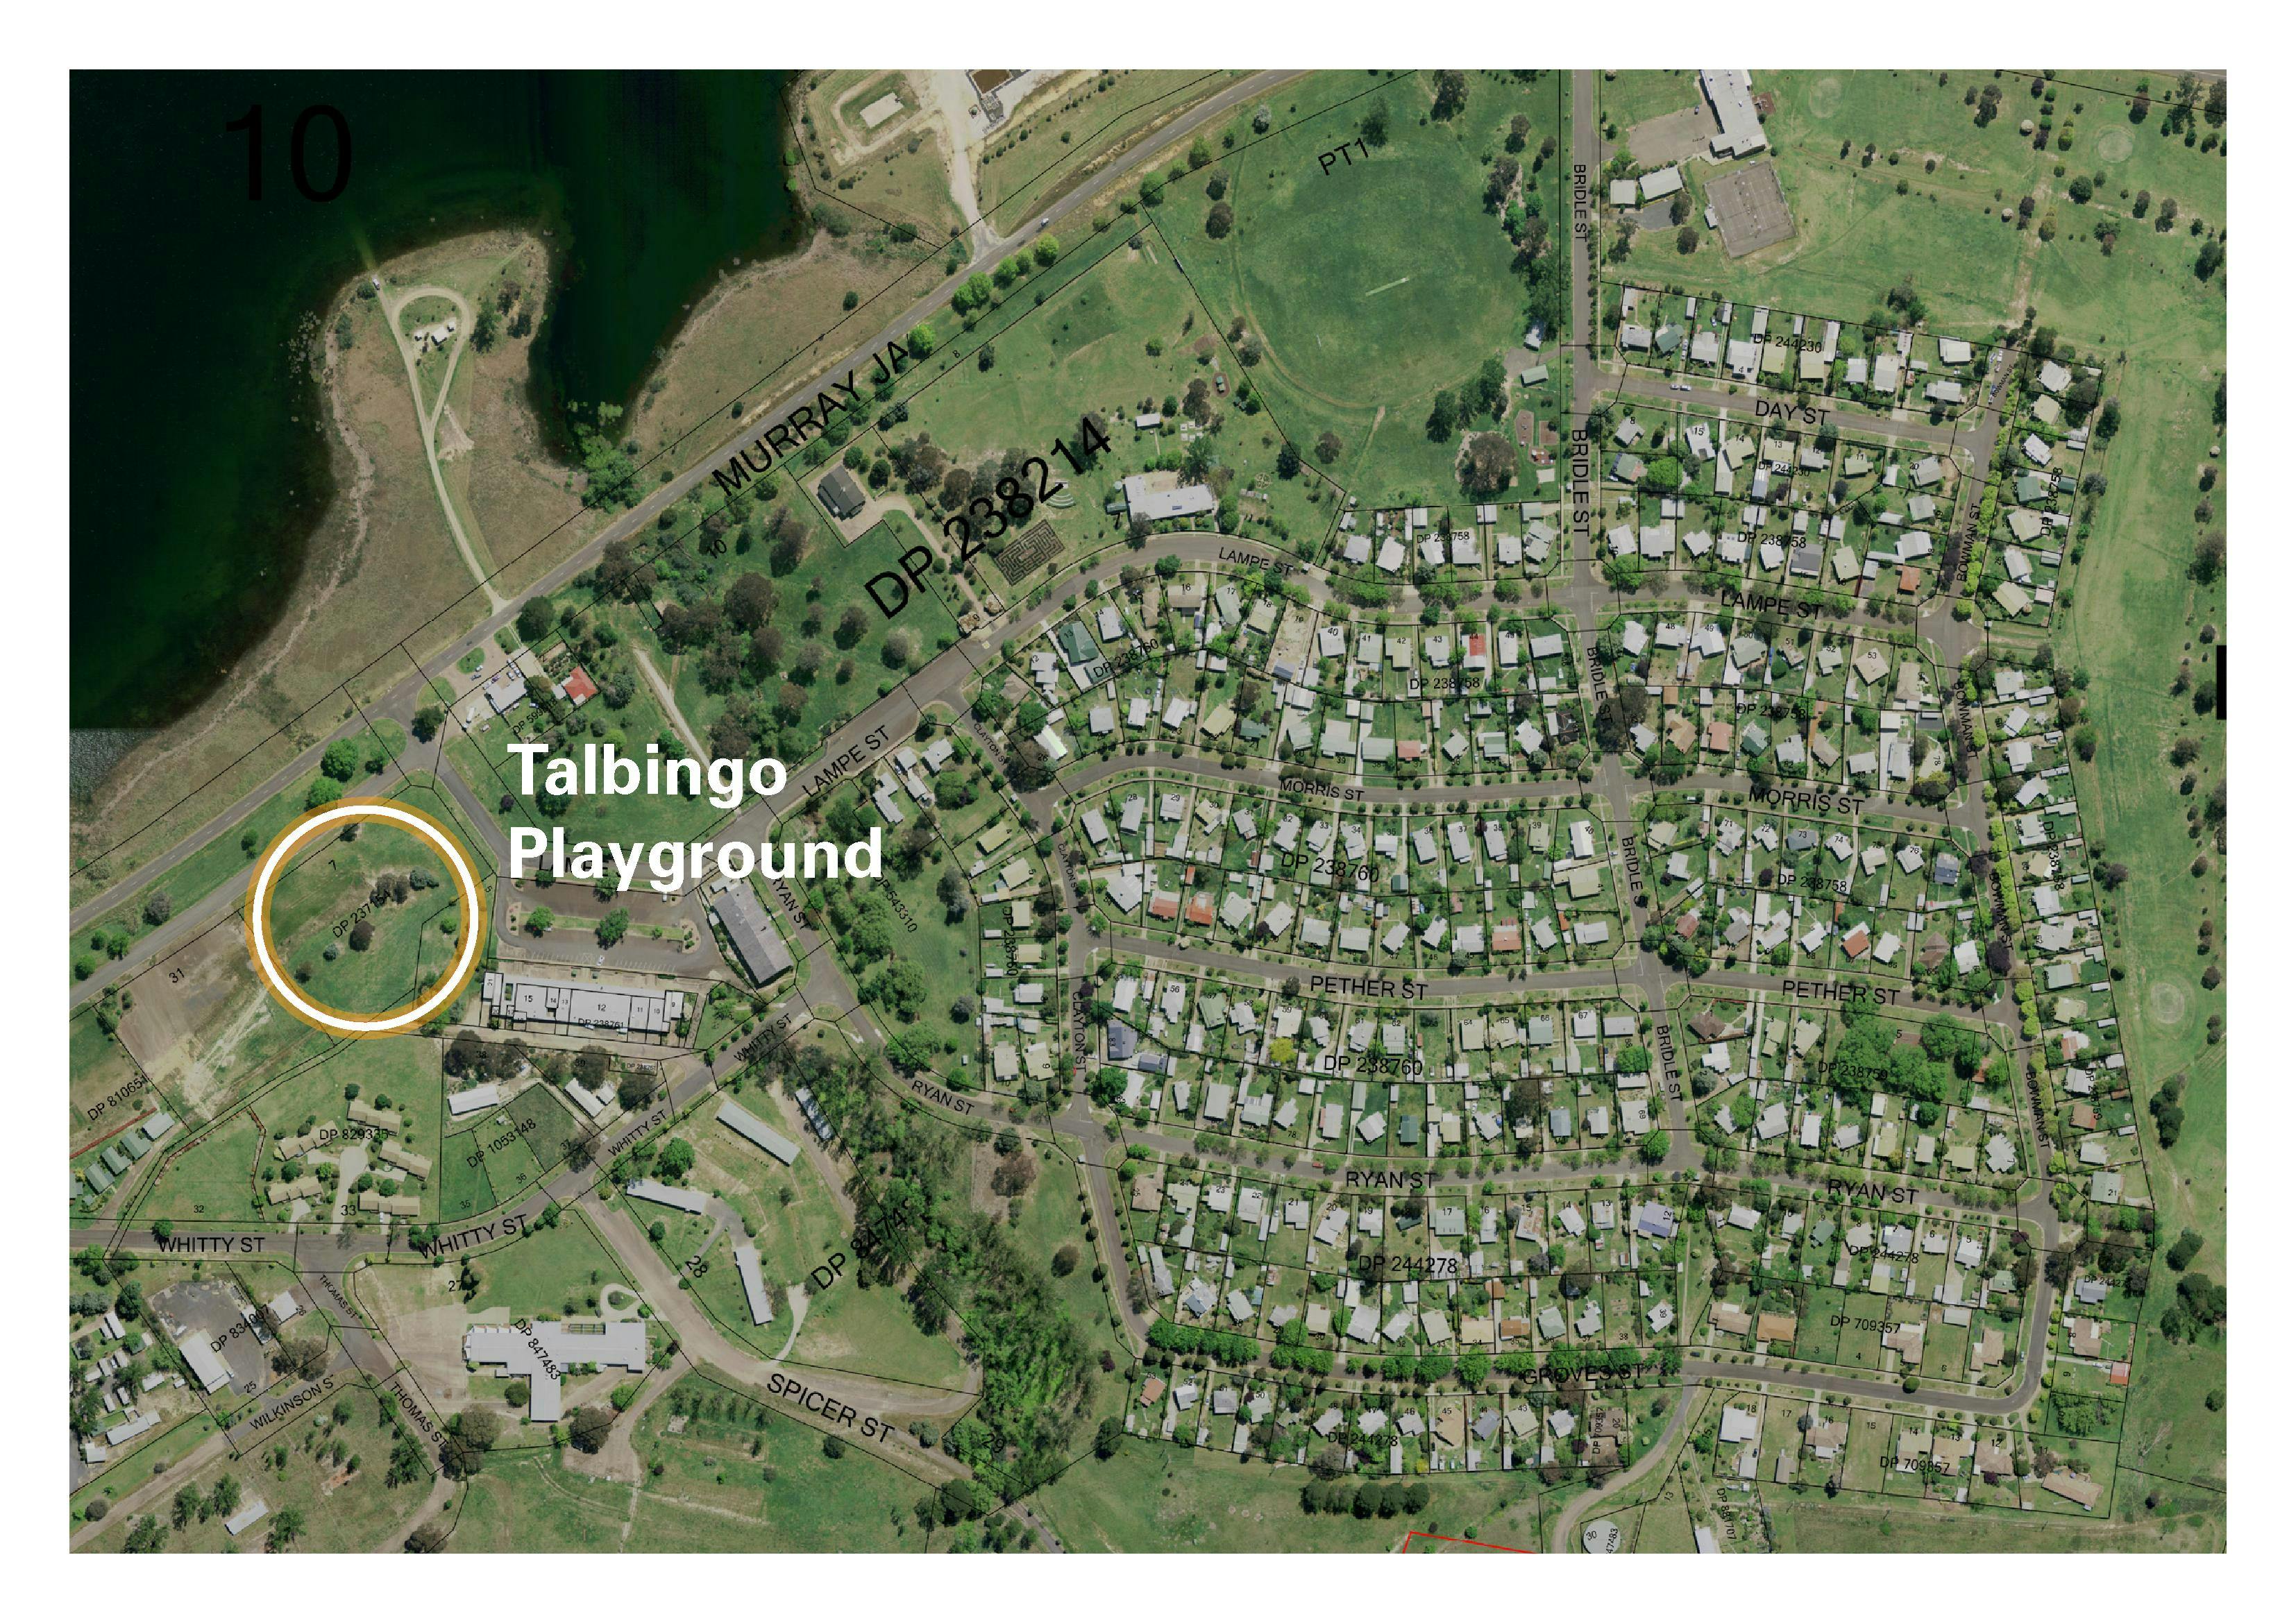 Talbingo Playground Map